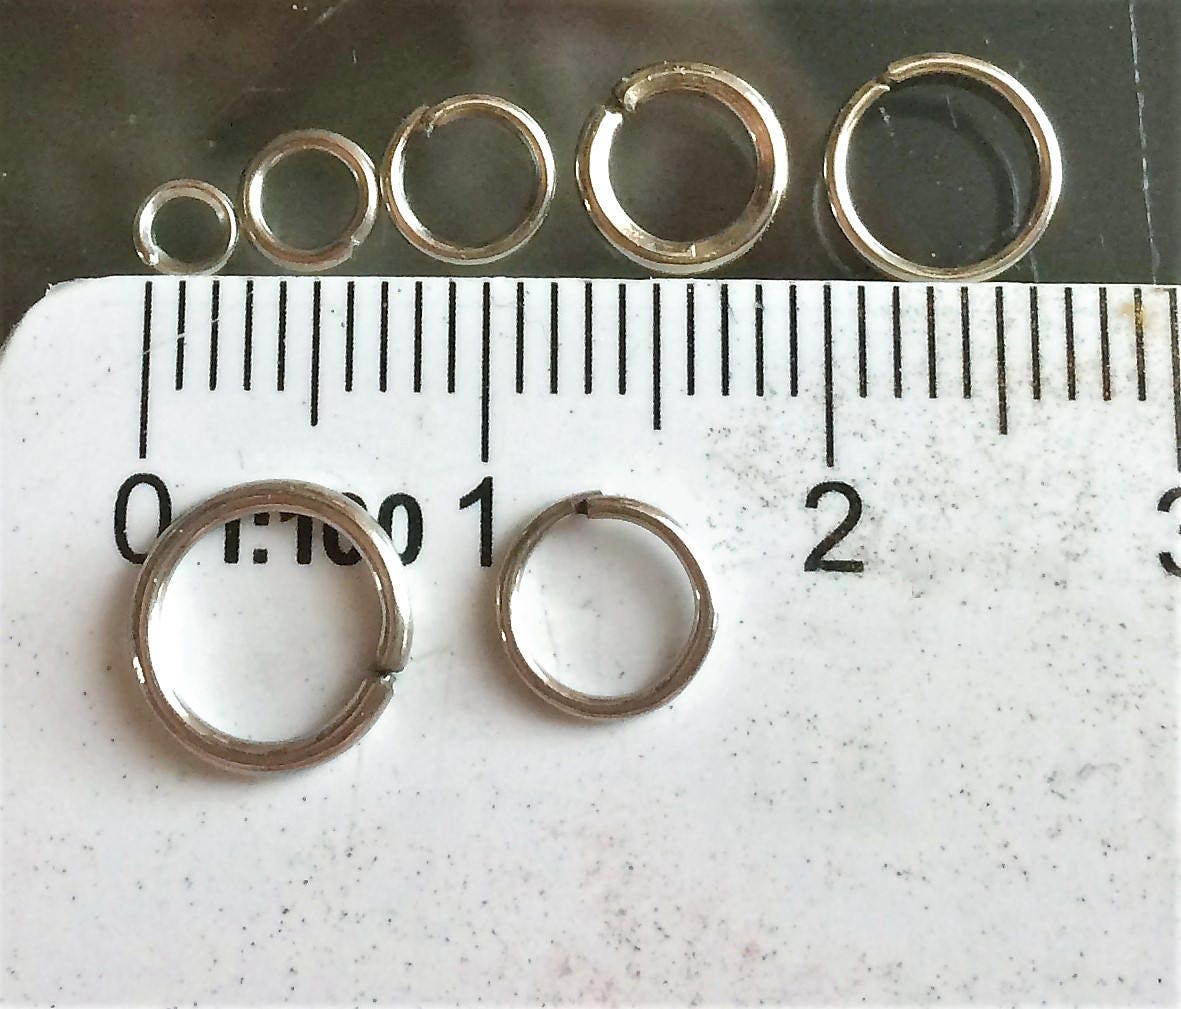  D-FLIFE Jump Rings for Jewelry Making Kit, 1200 pcs